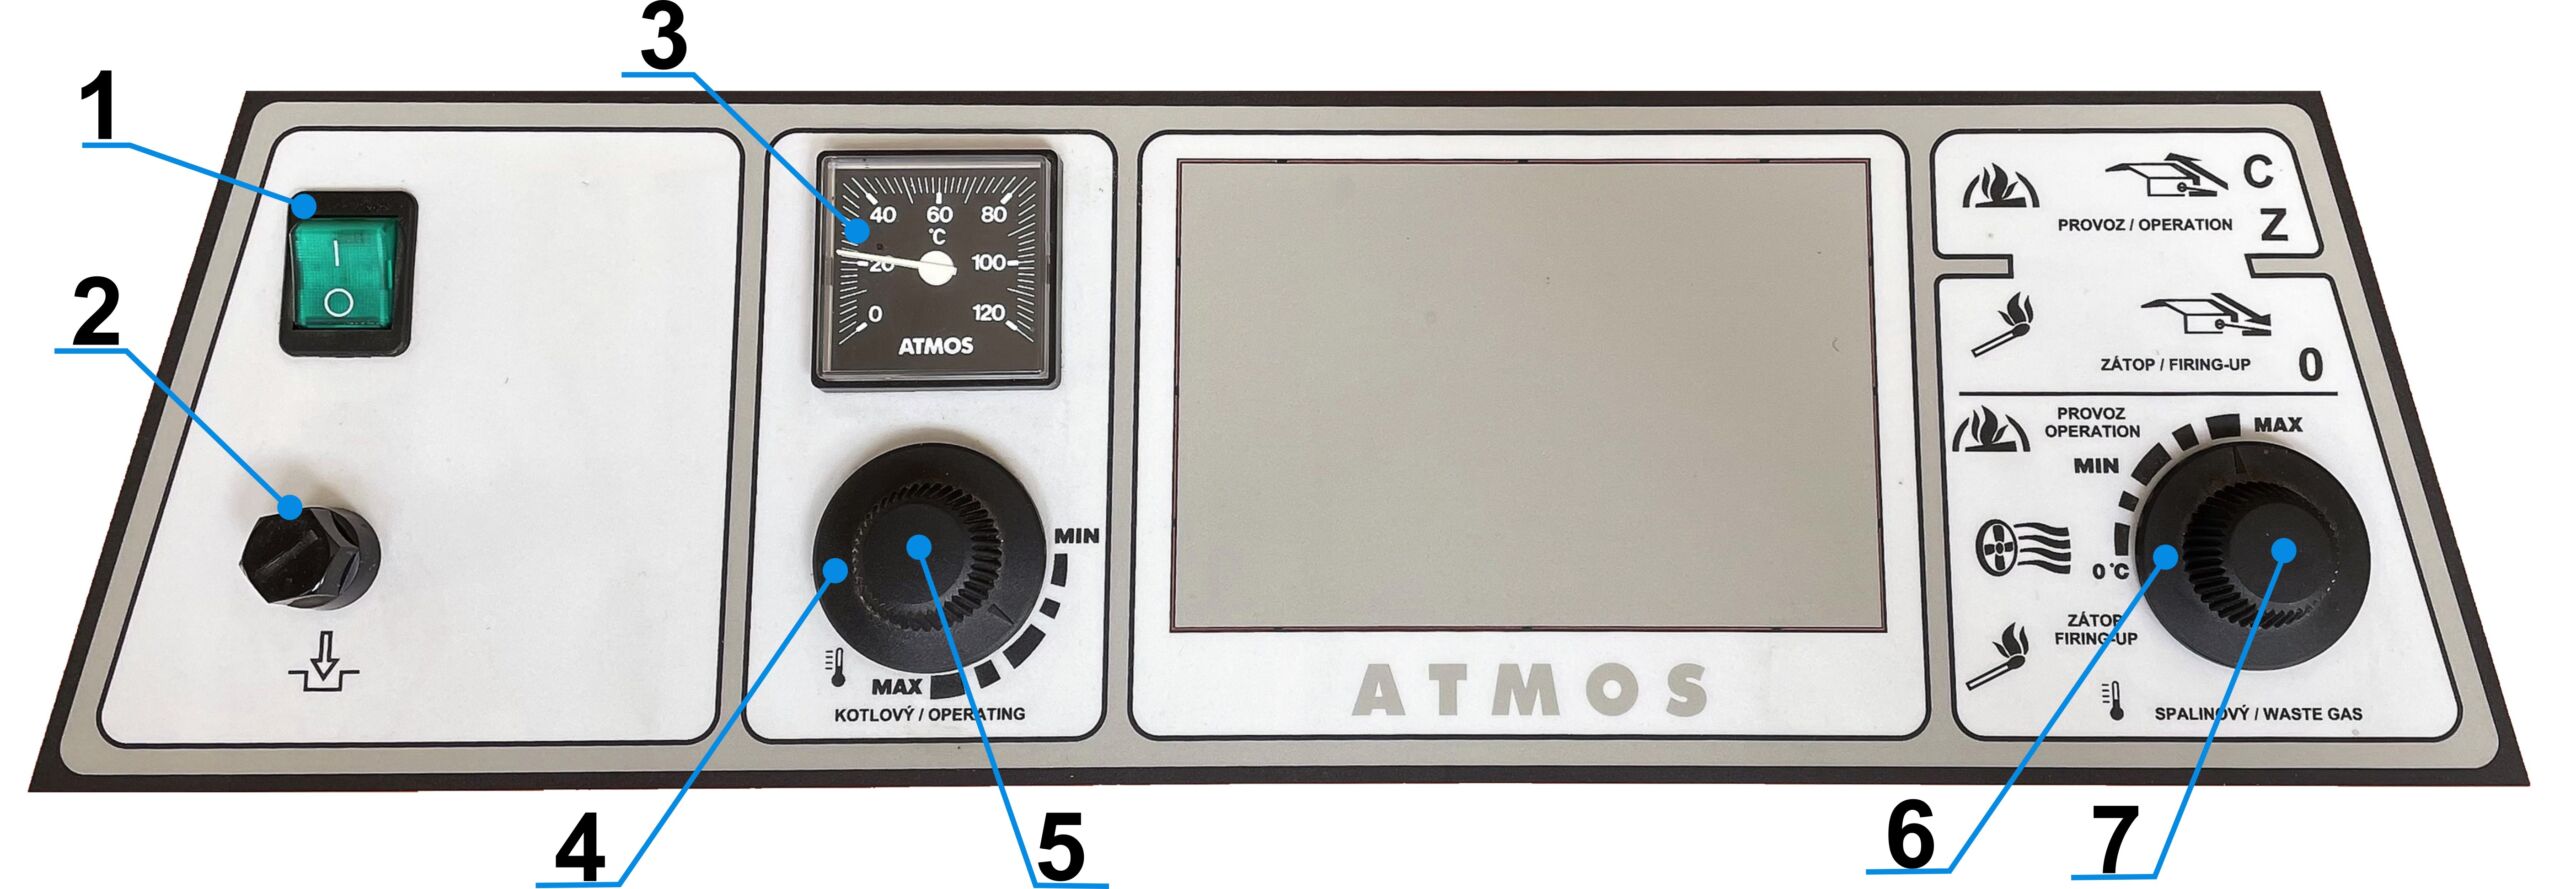 pozice schematicka termostatu na pristrojove desce atmos dc18s